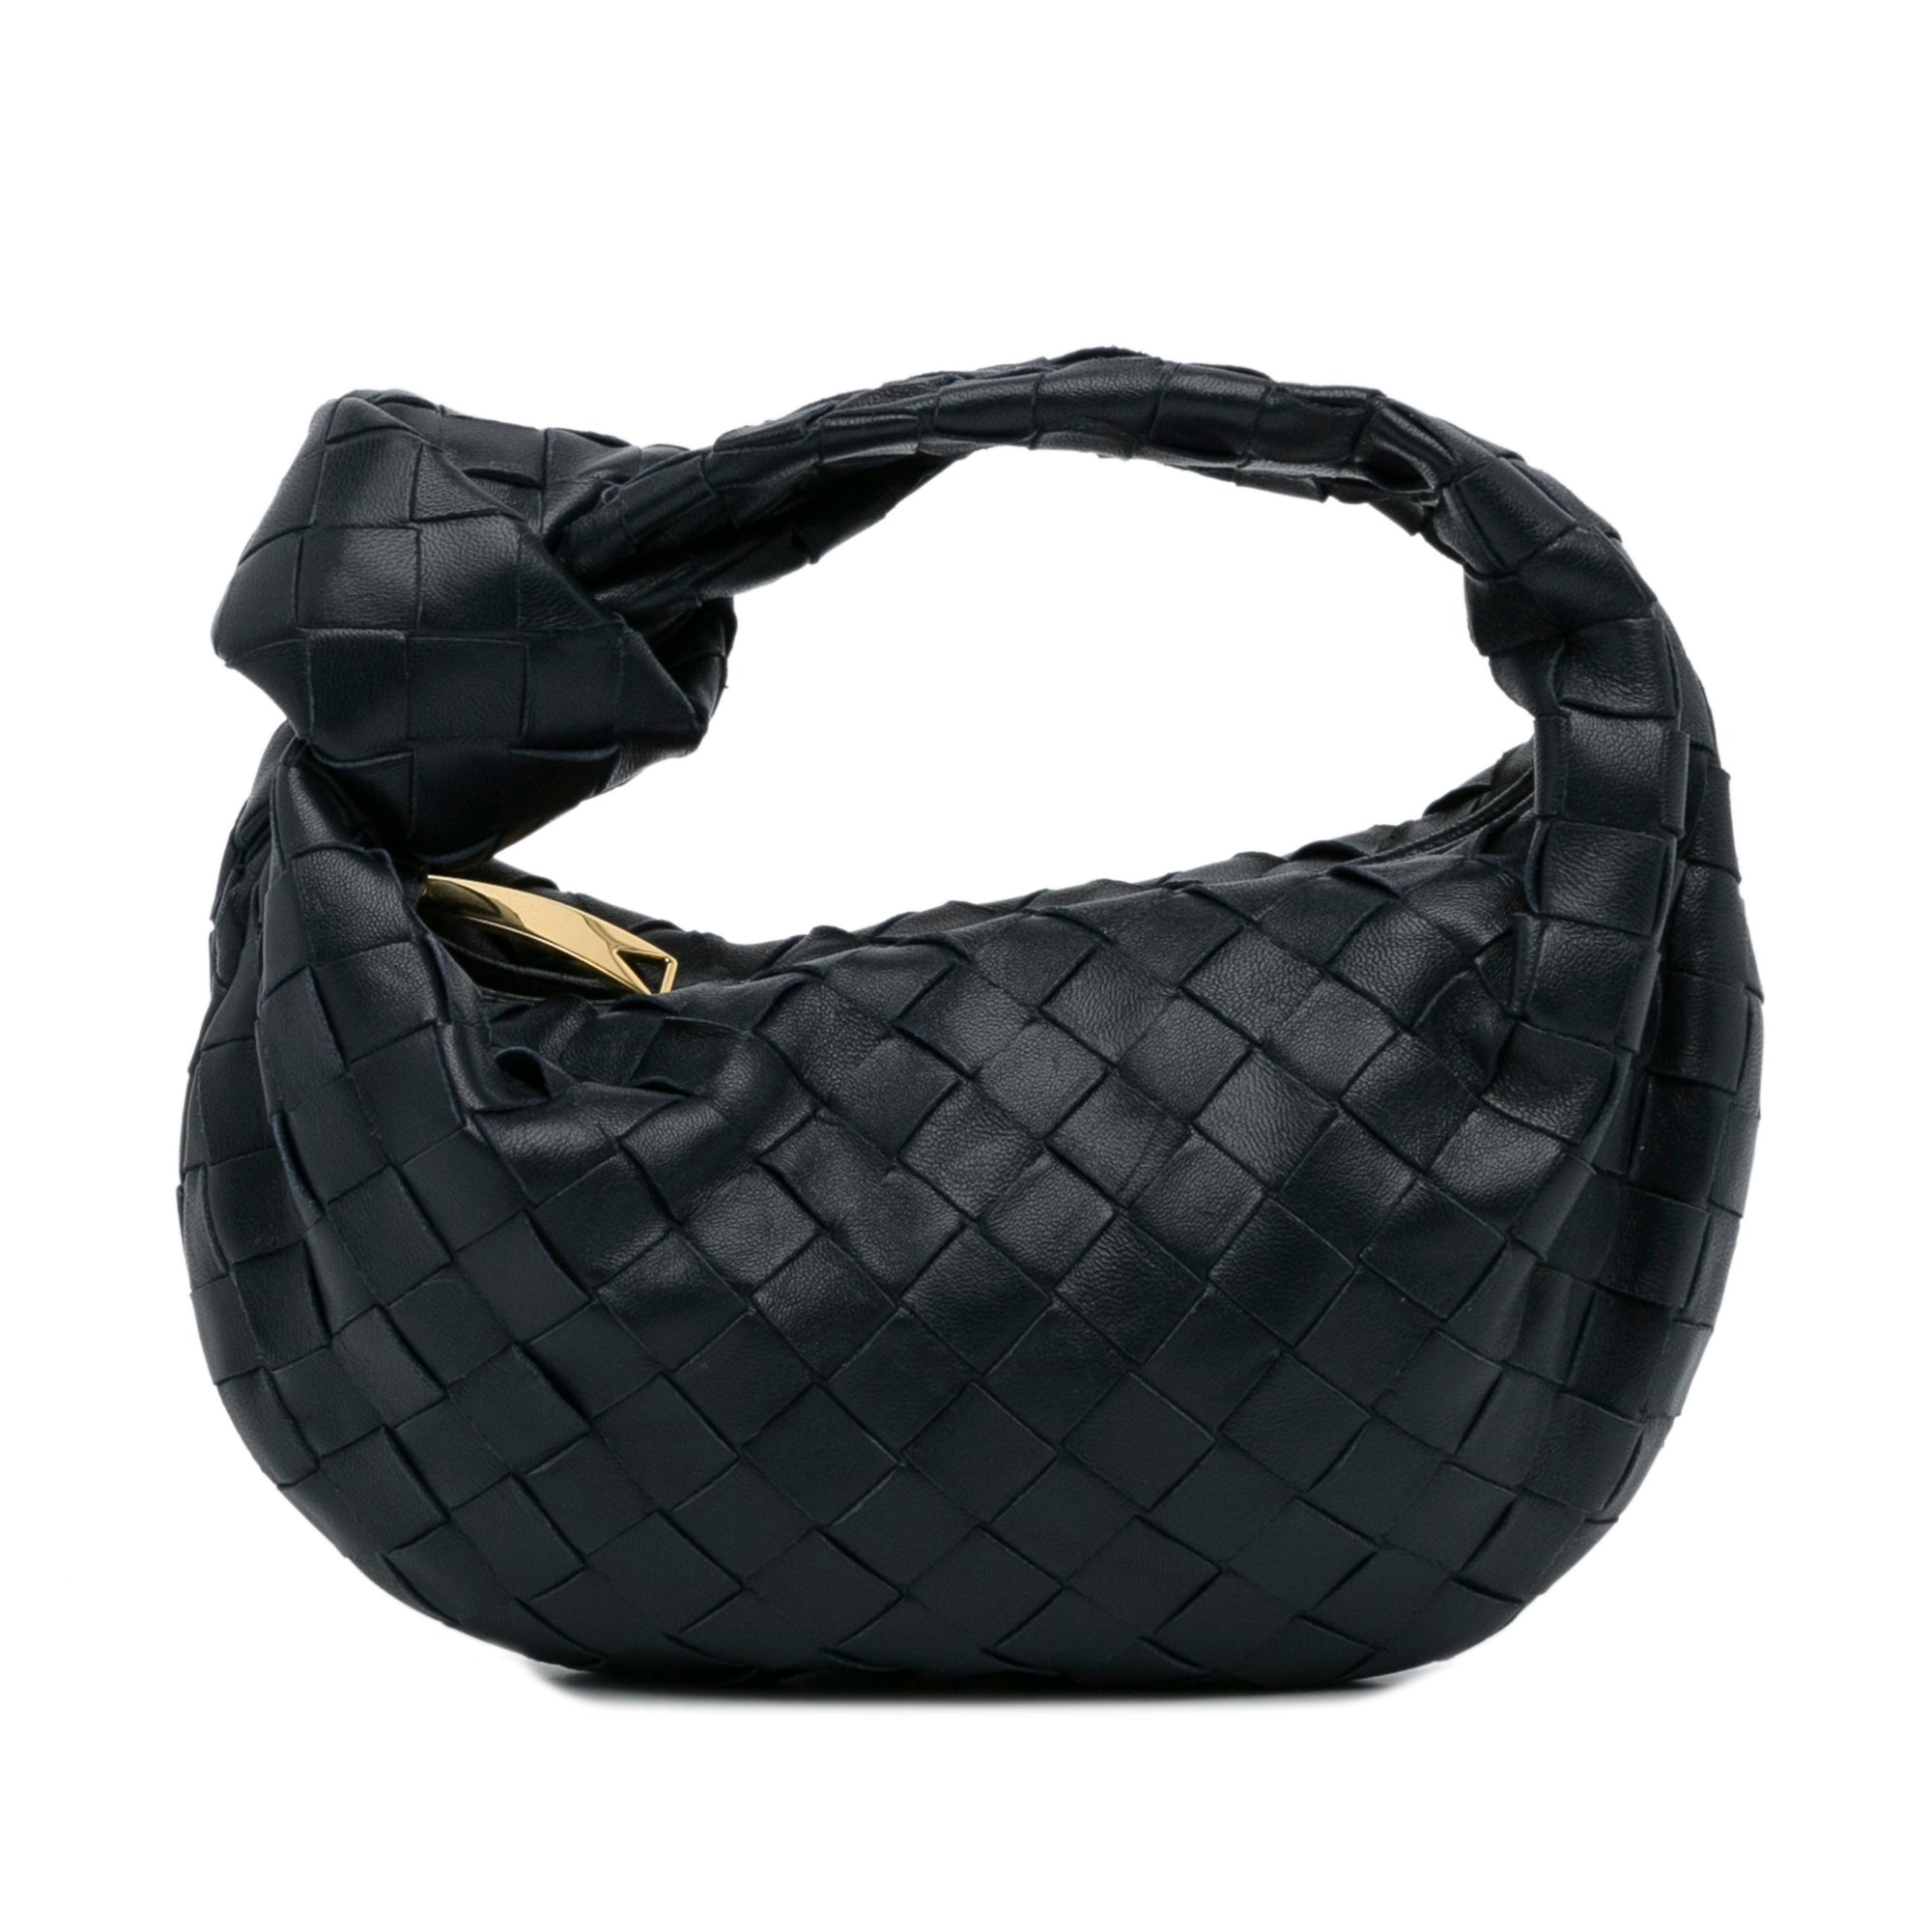 Knot intrecciato woven leather shoulder bag